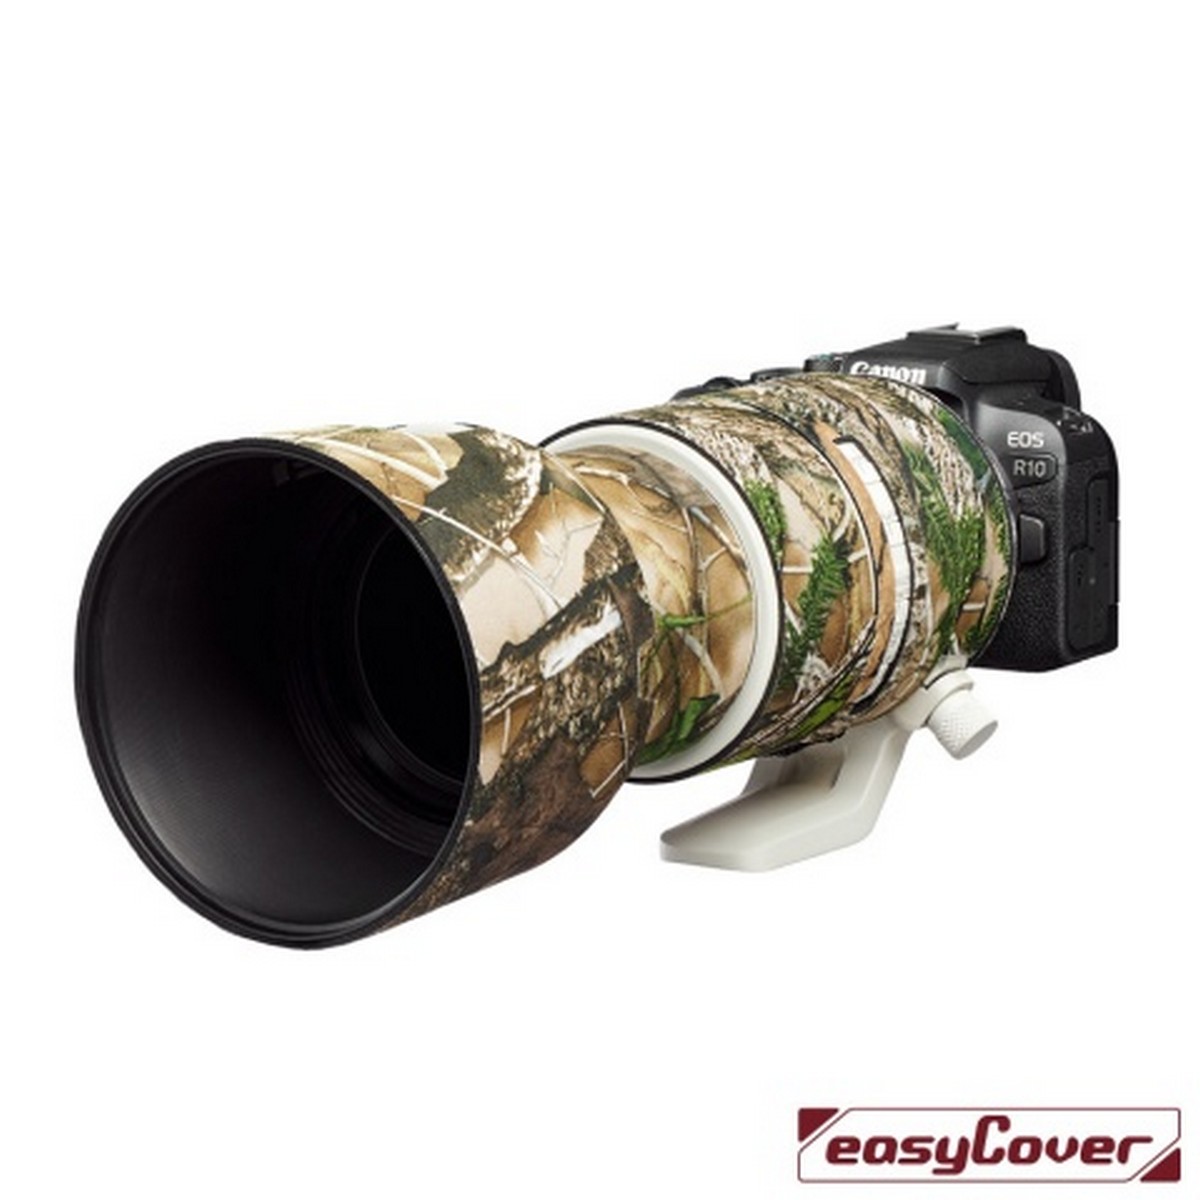 Easycover Lens Oak Objektivschutz für Canon RF 70-200 mm 1:2.8L IS USM Forest Camouflage